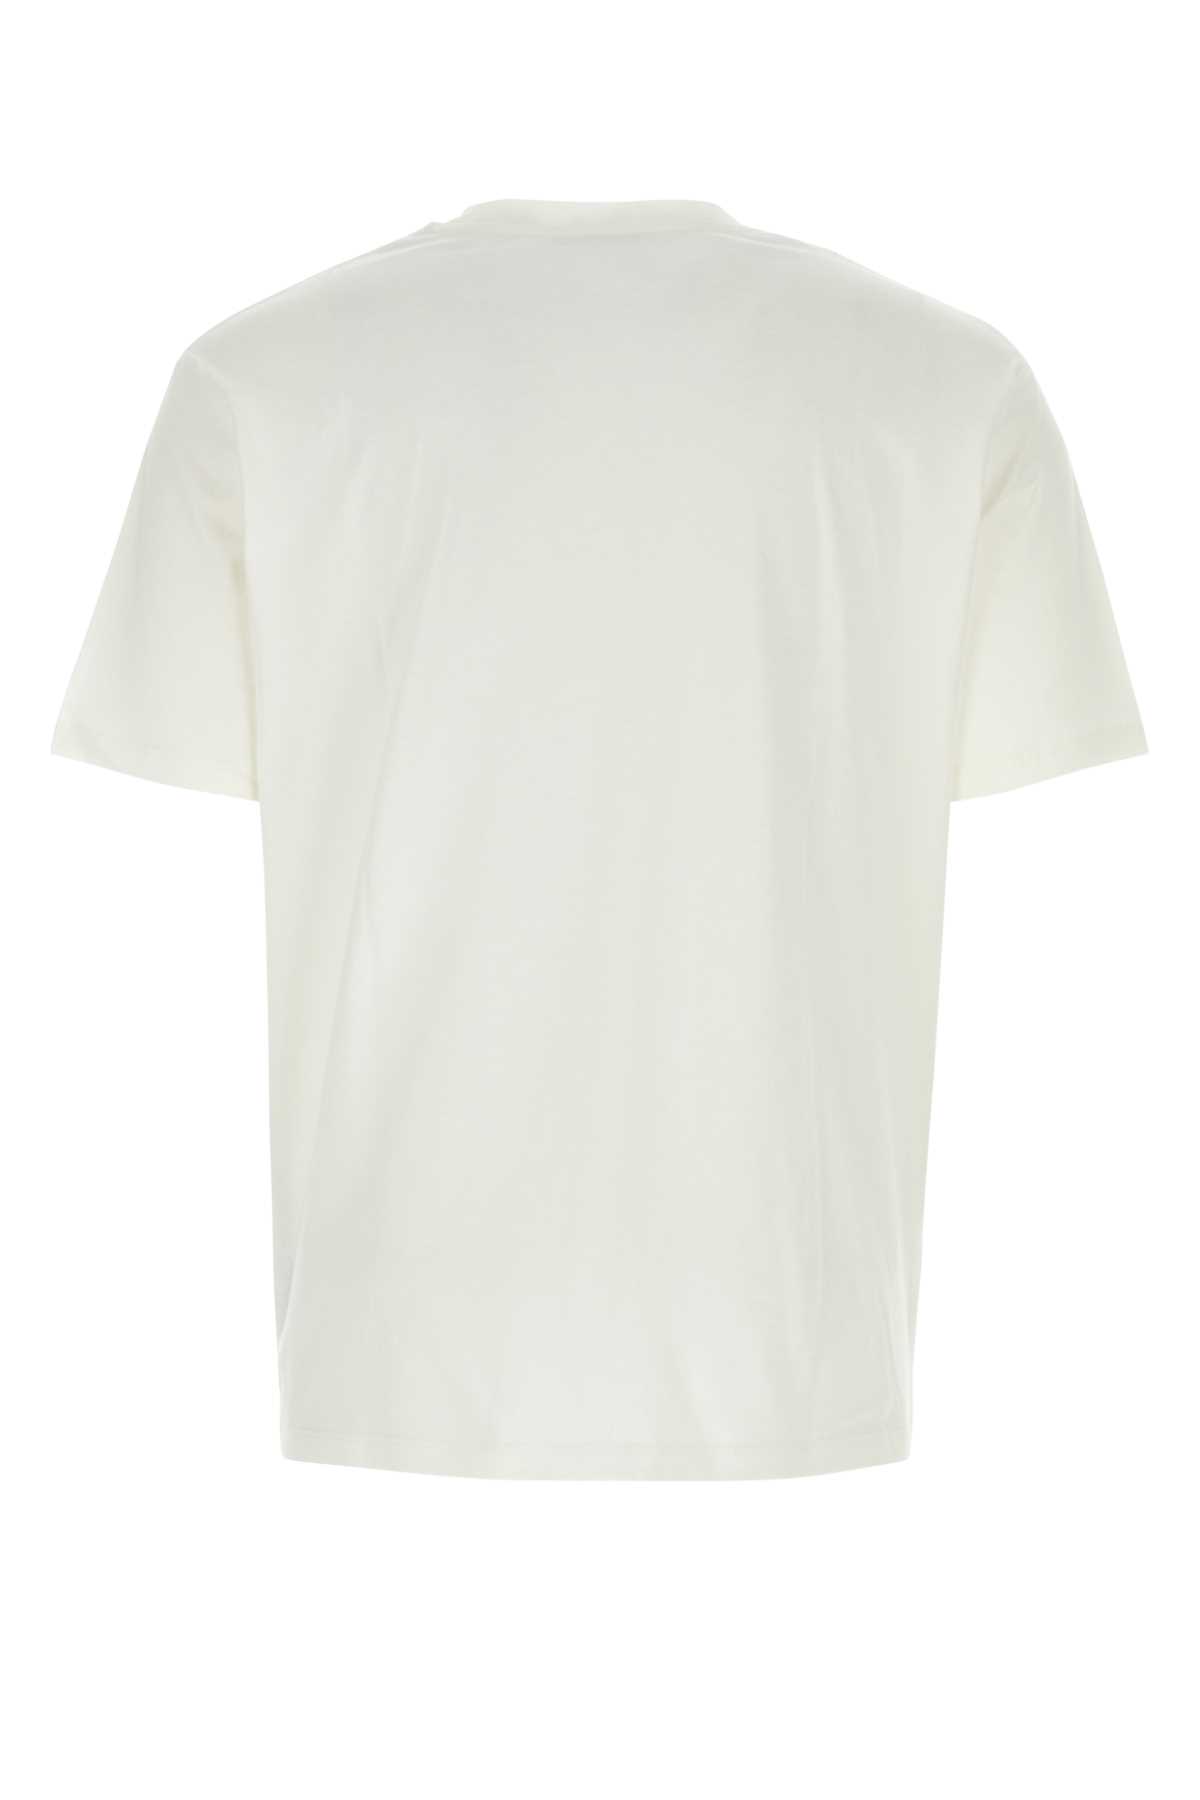 Balmain White Cotton T-shirt In Gabblancnoir